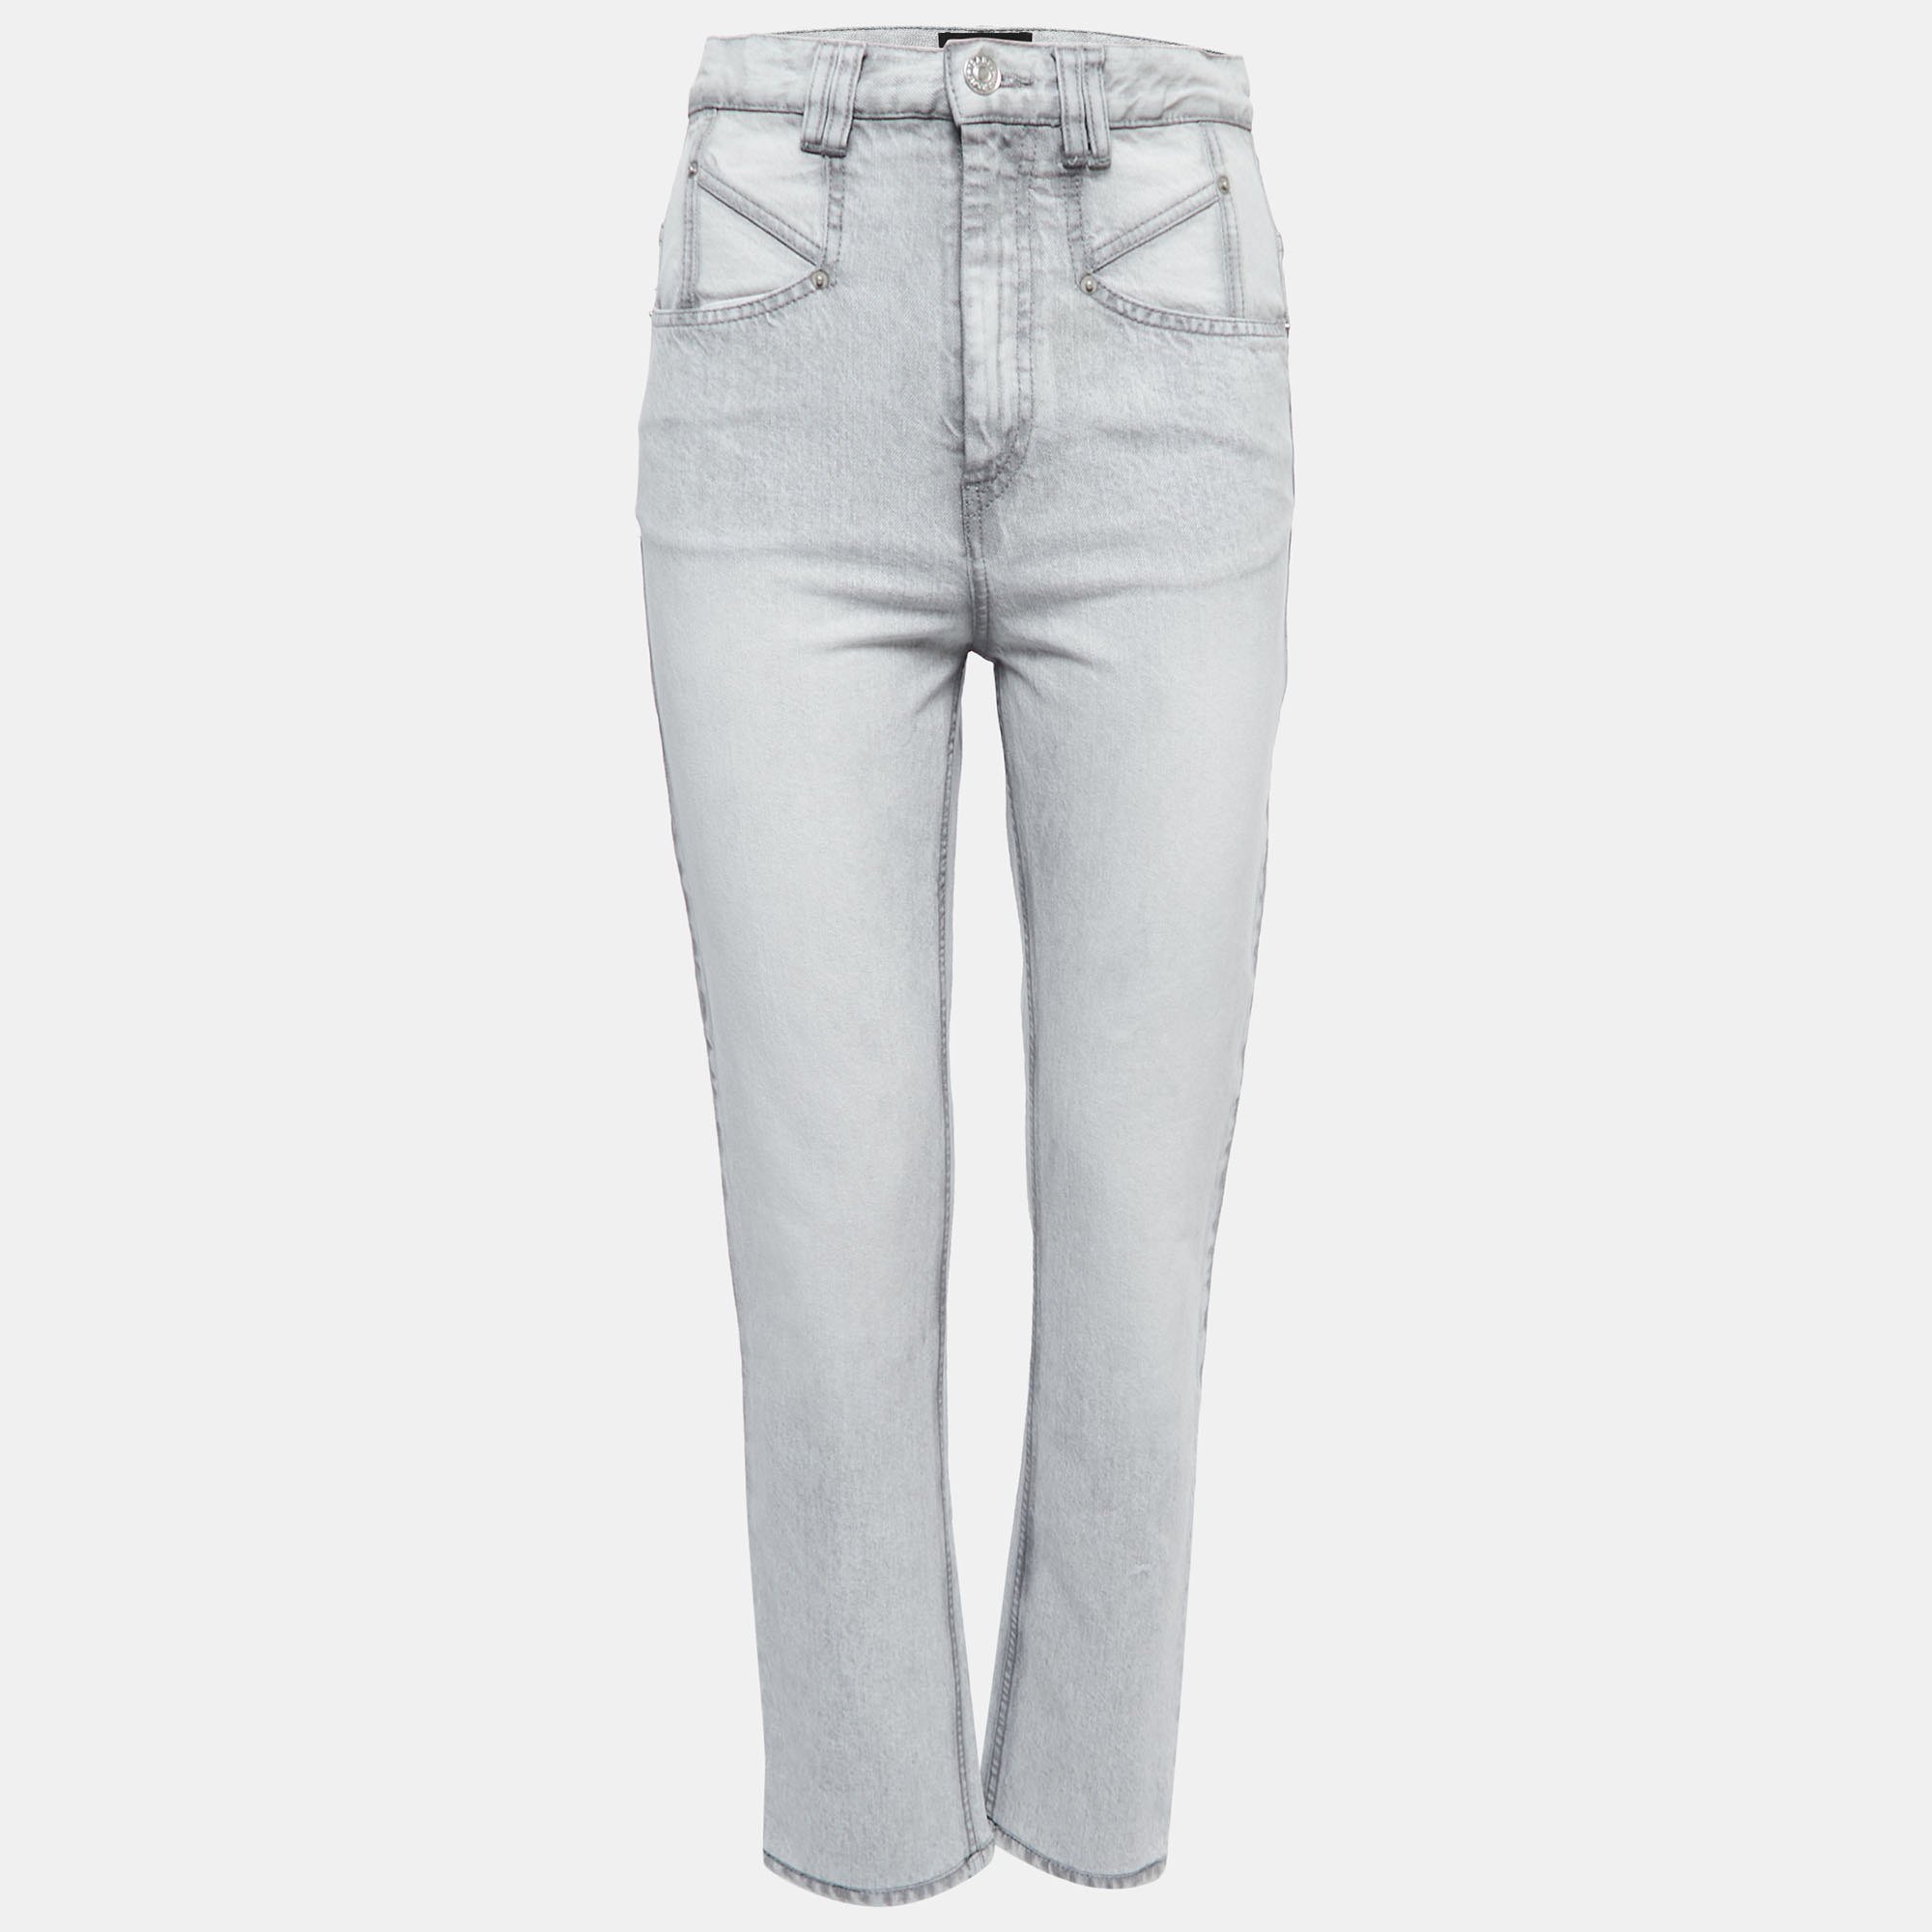 Isabel marant grey washed denim high waist jeans s waist 26"